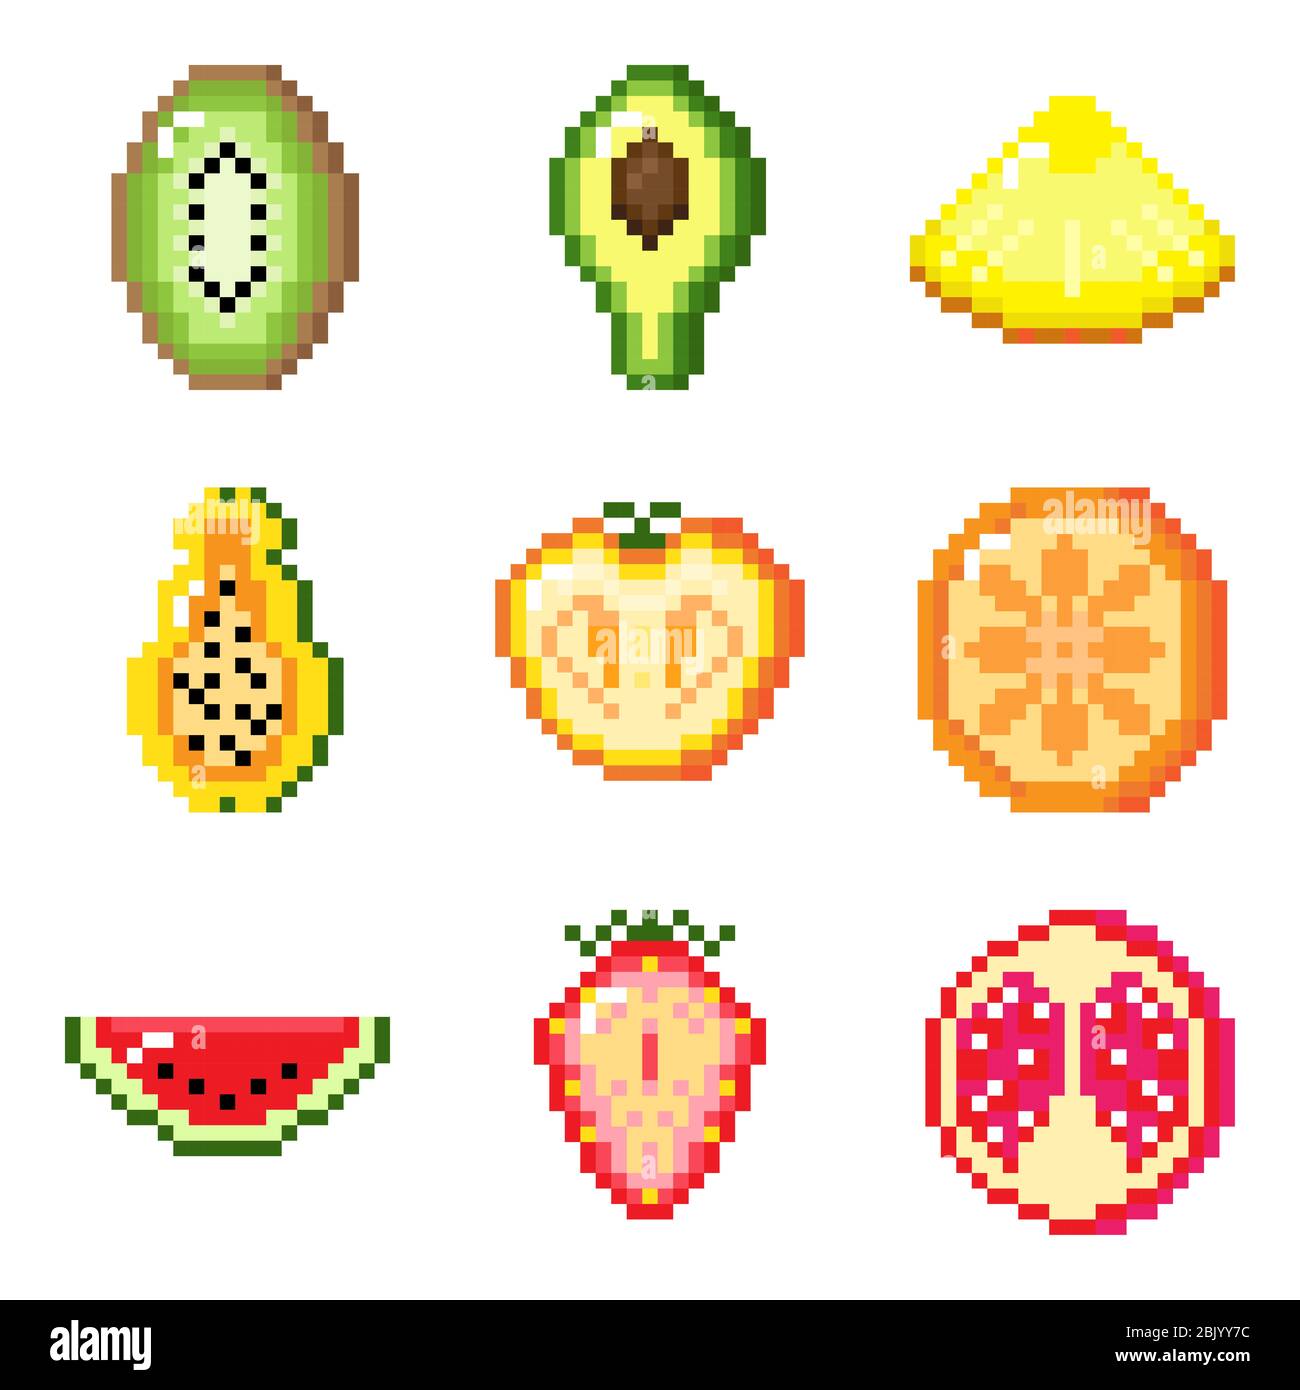 Premium Vector  Pixel fruits cartoon 2d game sprite asset with apple  banana mango citrus pineapple cherry 8bit collection of fruit signs for  game development vector set